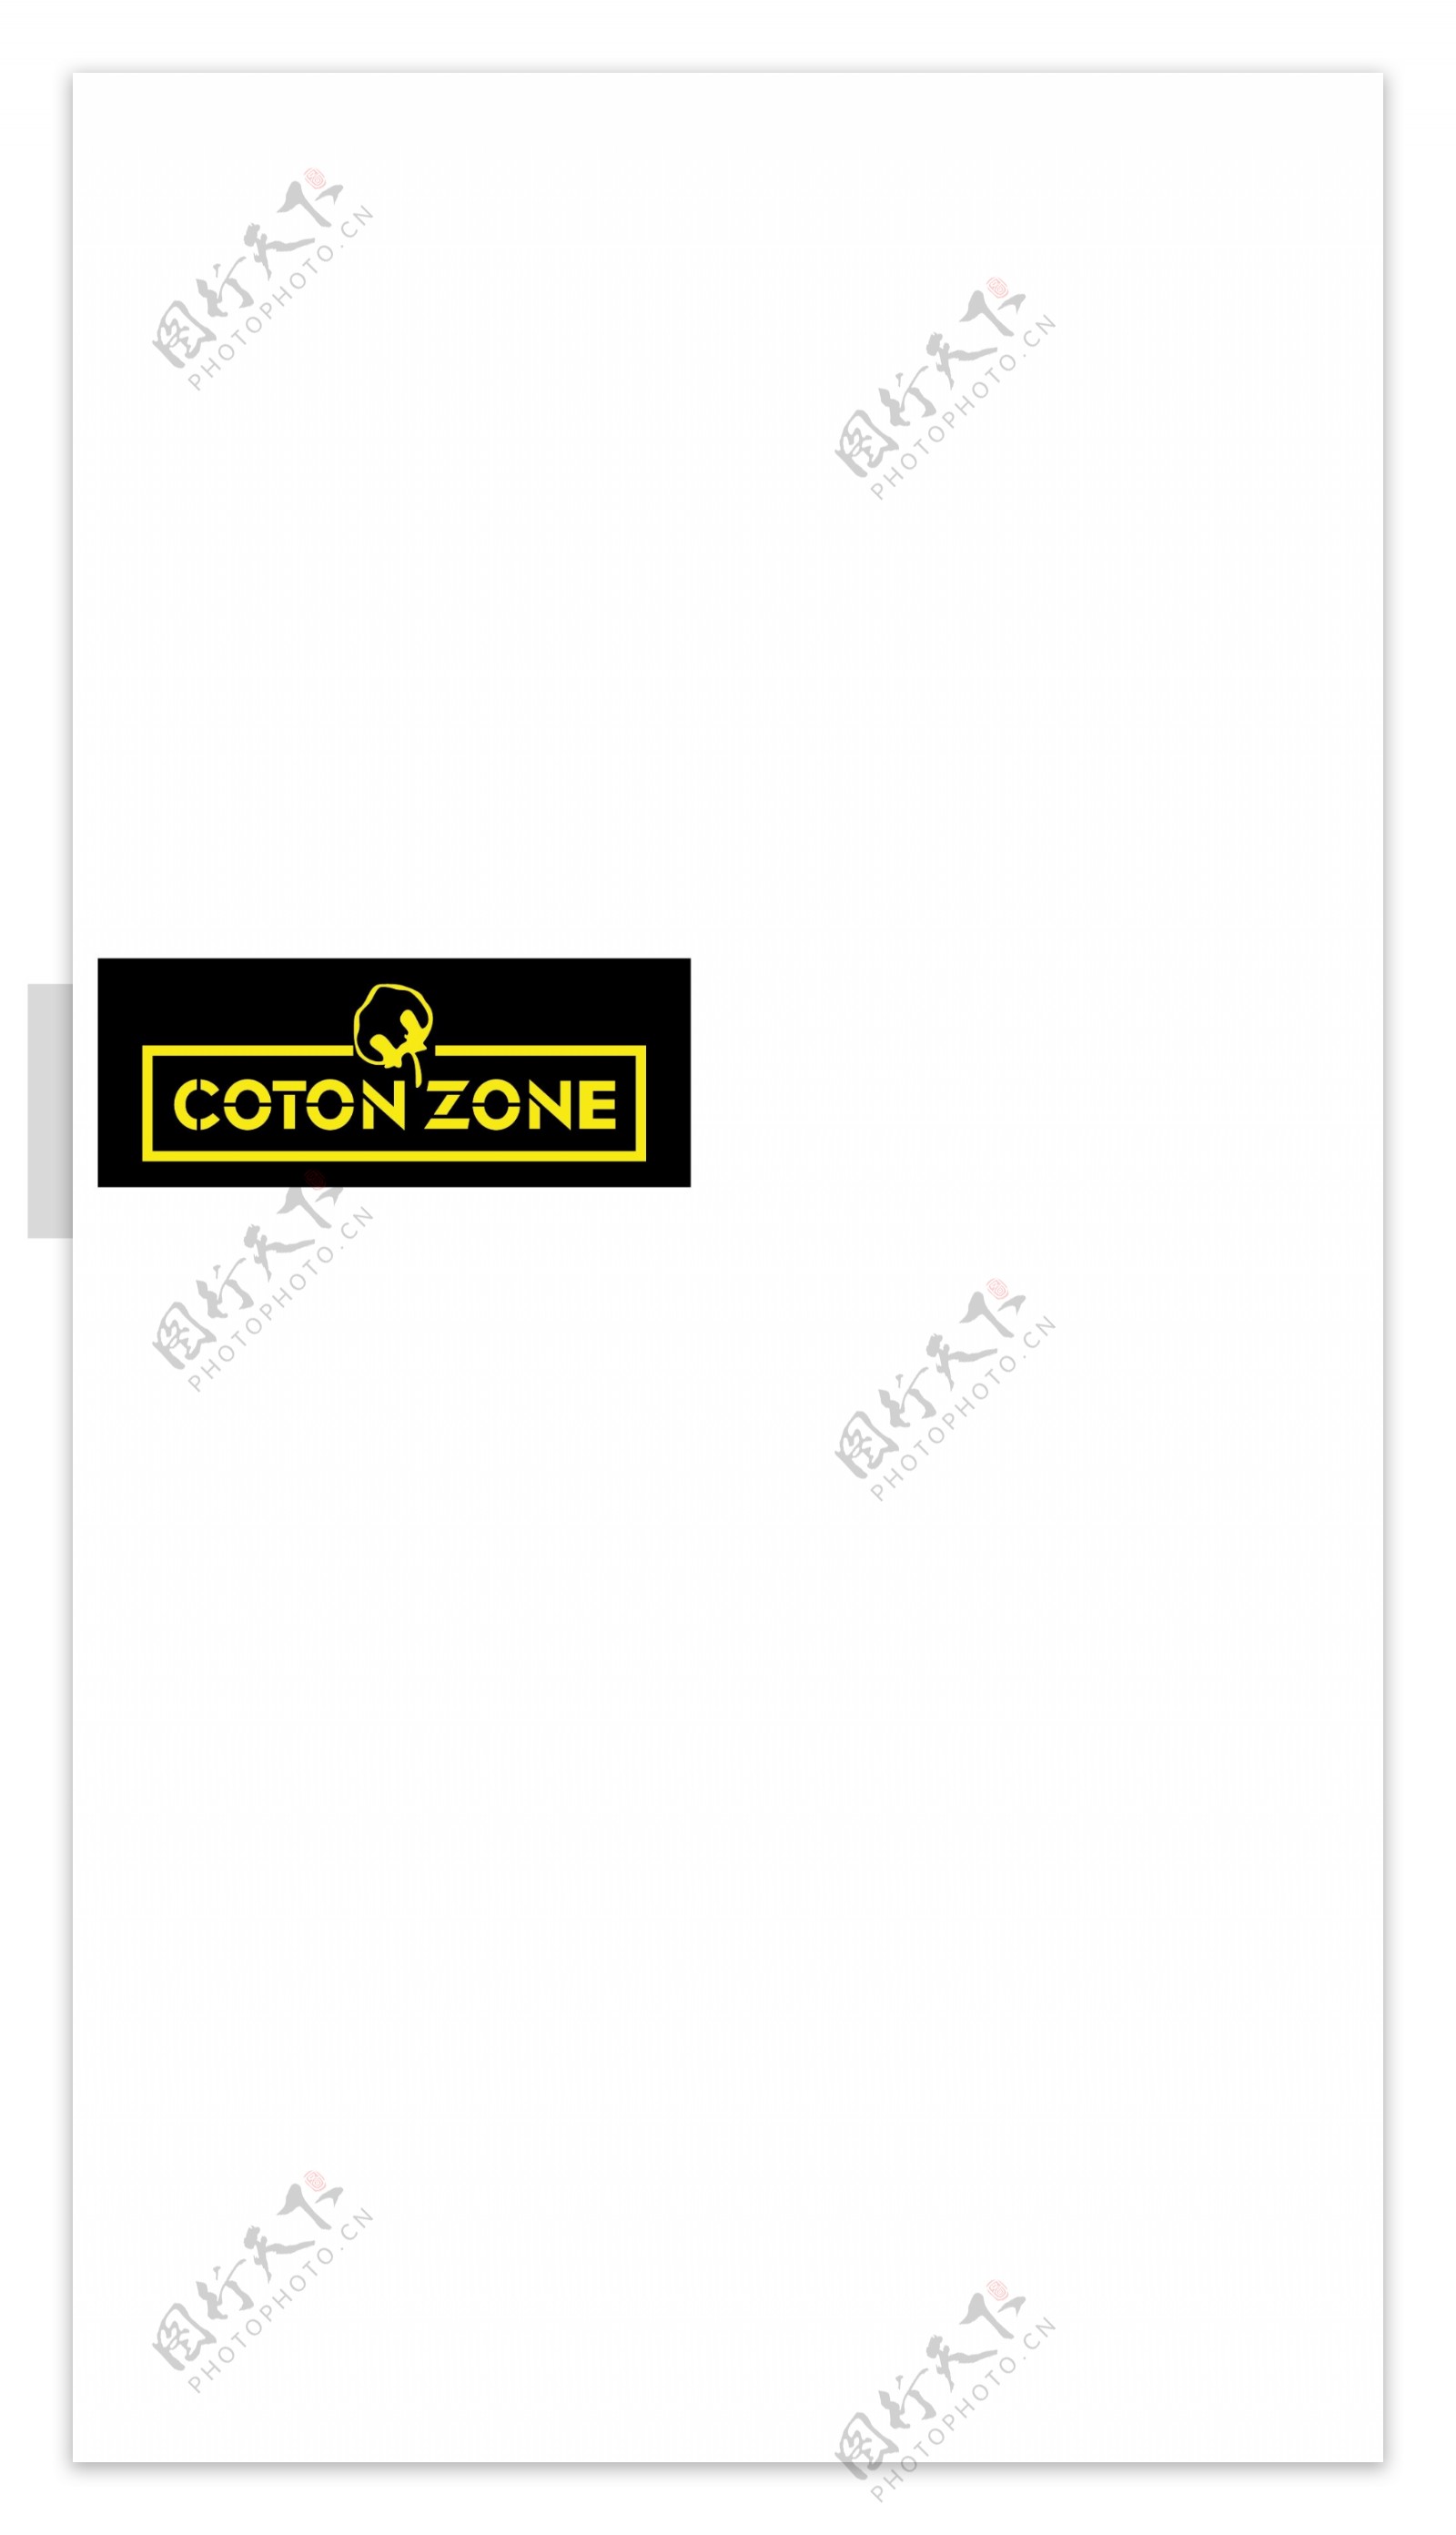 CottonZonelogo设计欣赏CottonZone服饰品牌标志下载标志设计欣赏